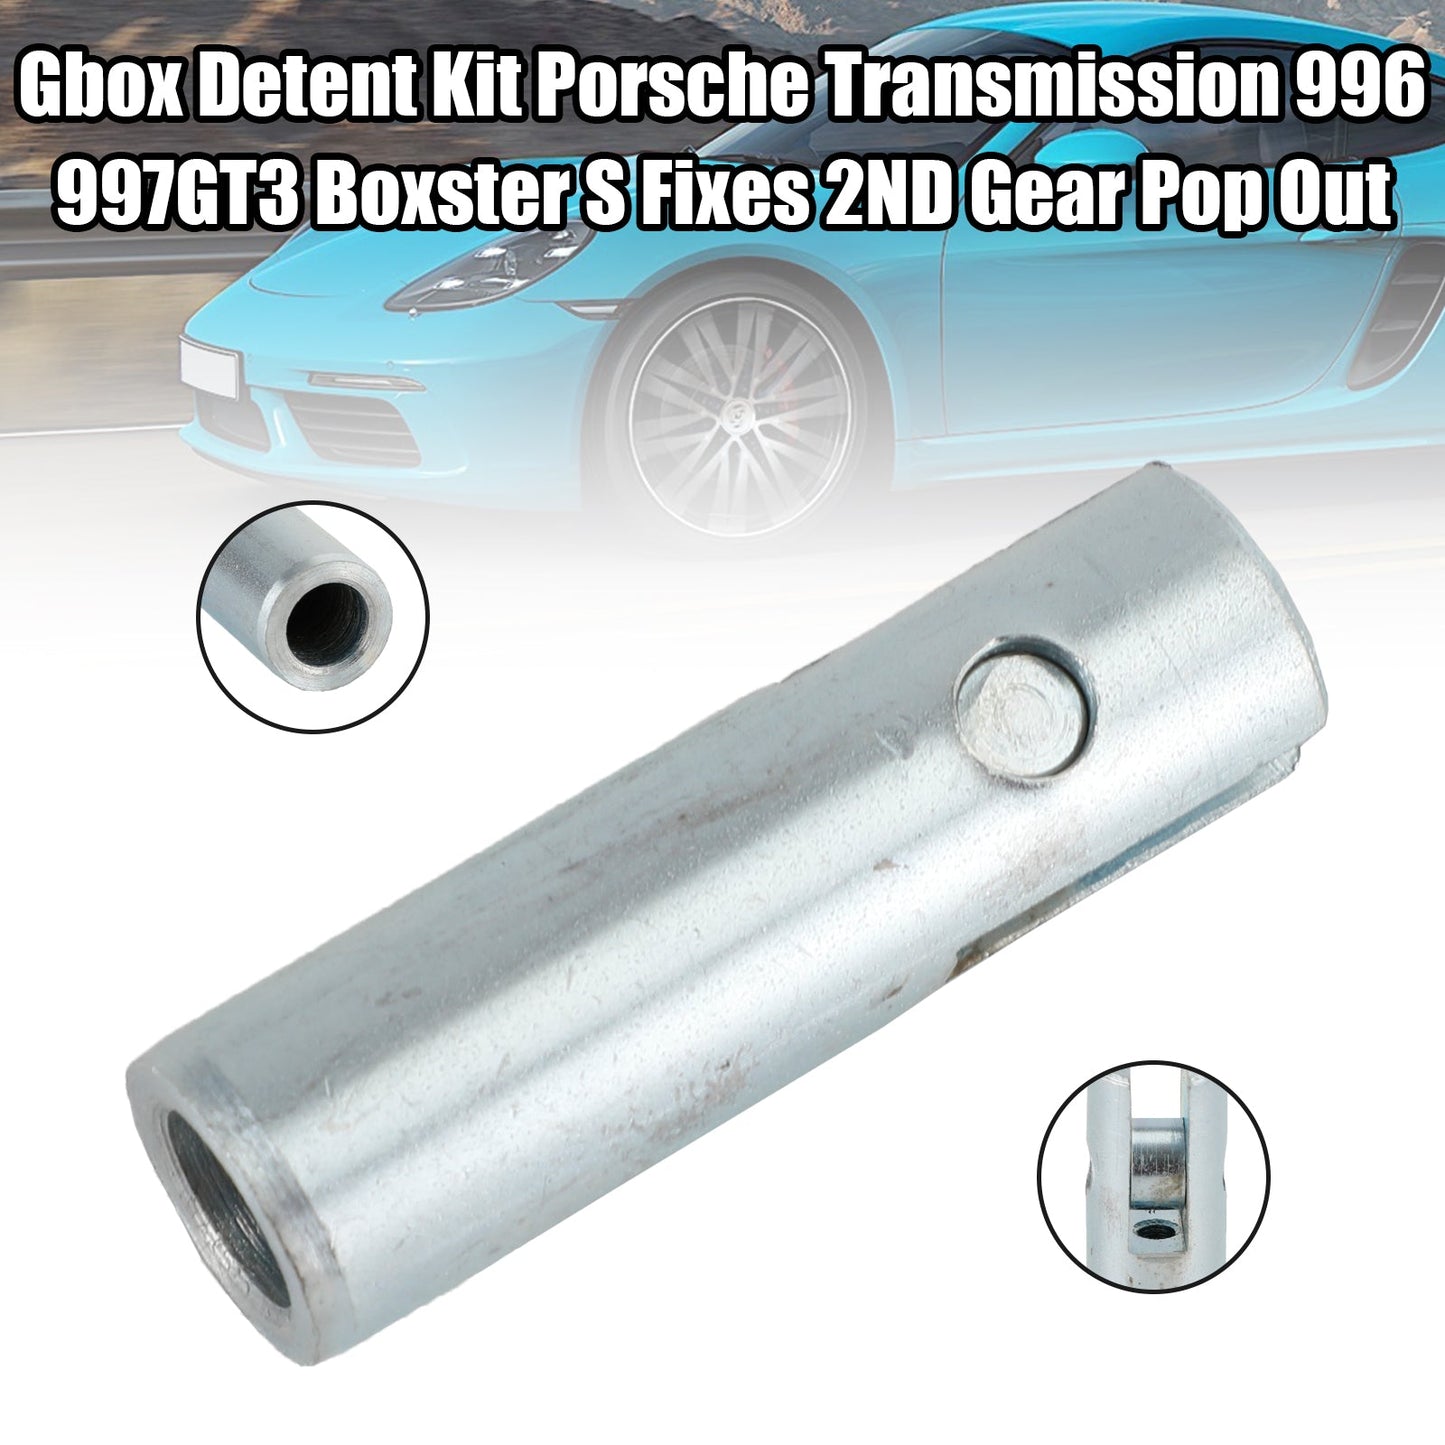 Gbox Detent Kit for Porsche Transmission 996 997GT3 Boxster S Fixes 2ND Gear Pop